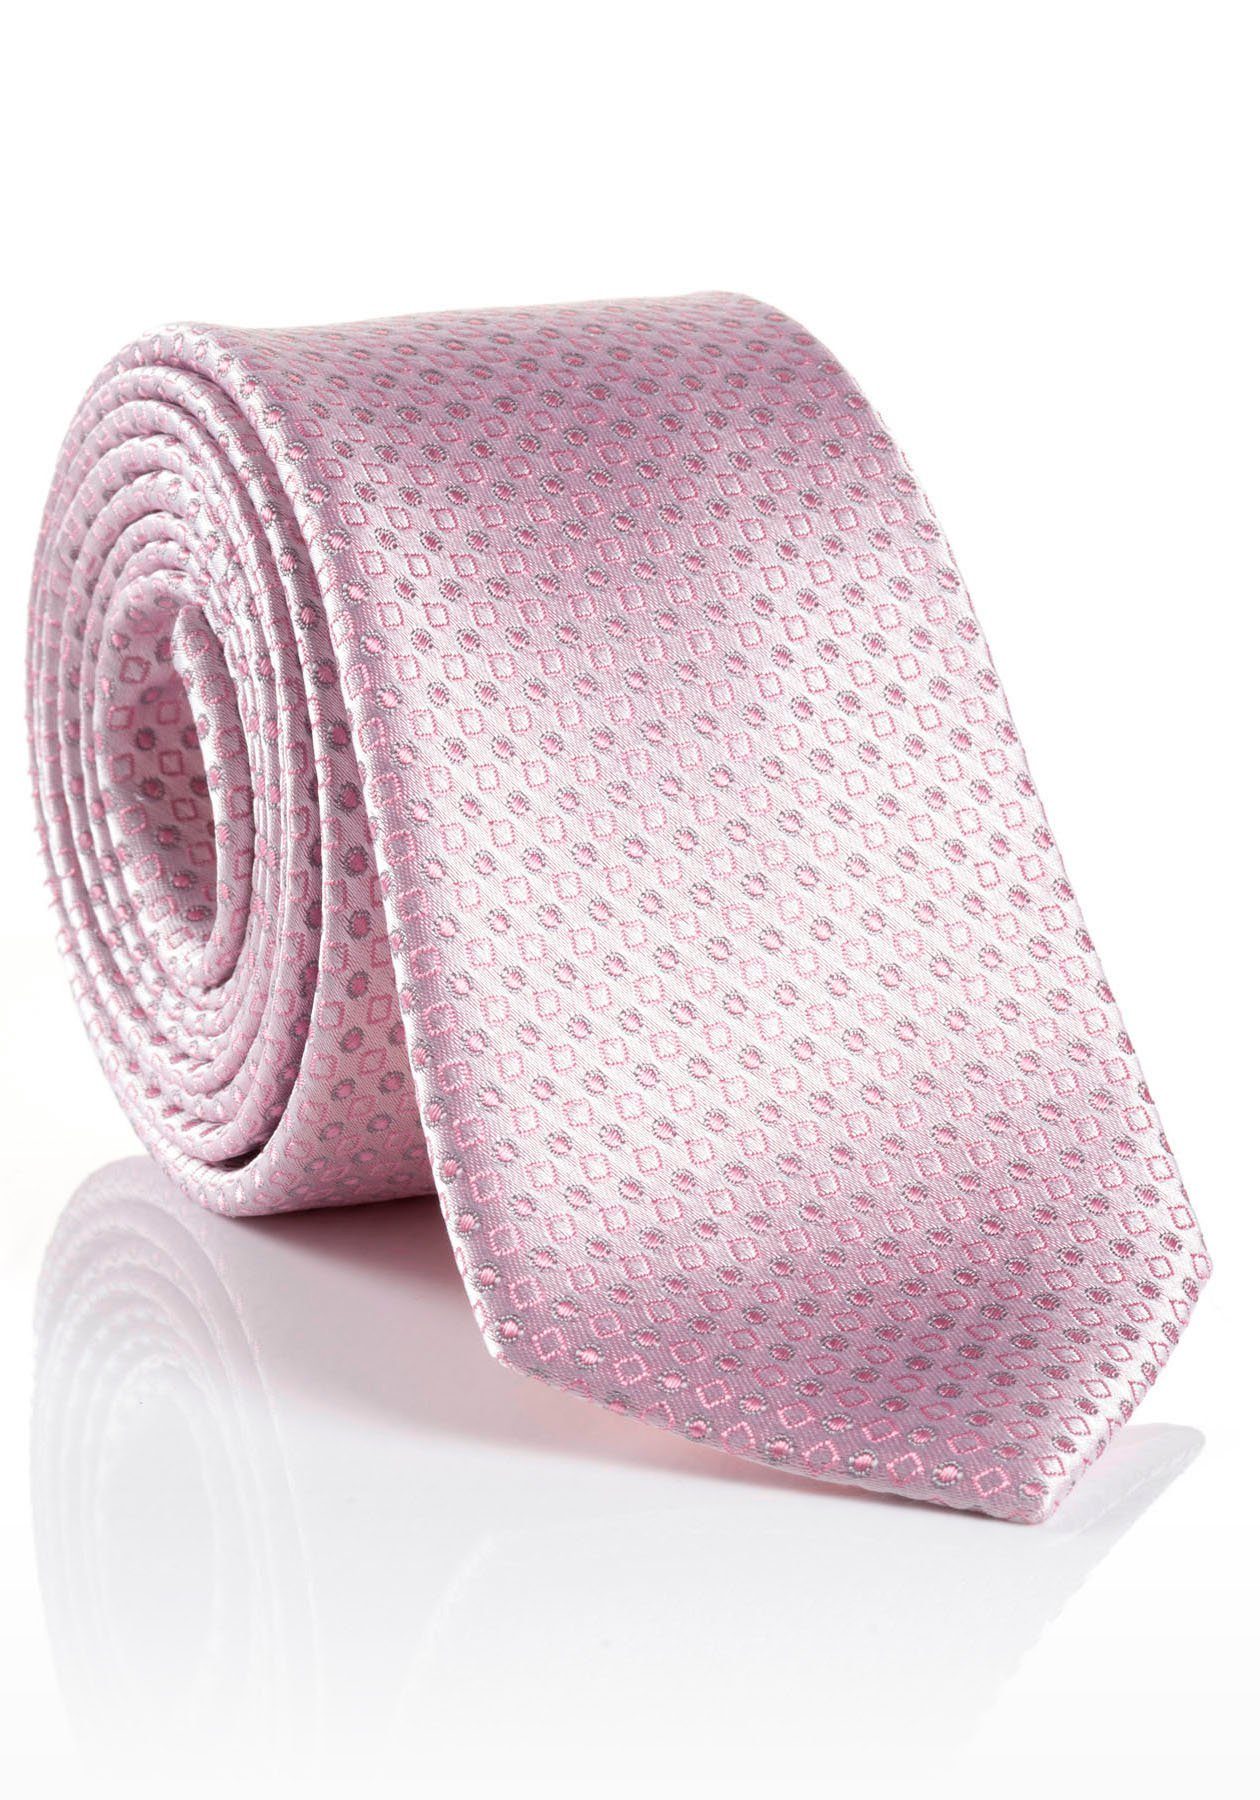 MONTI Krawatte LEANO Krawatte aus reiner Seide, Minimal-Design,Pastellfarben